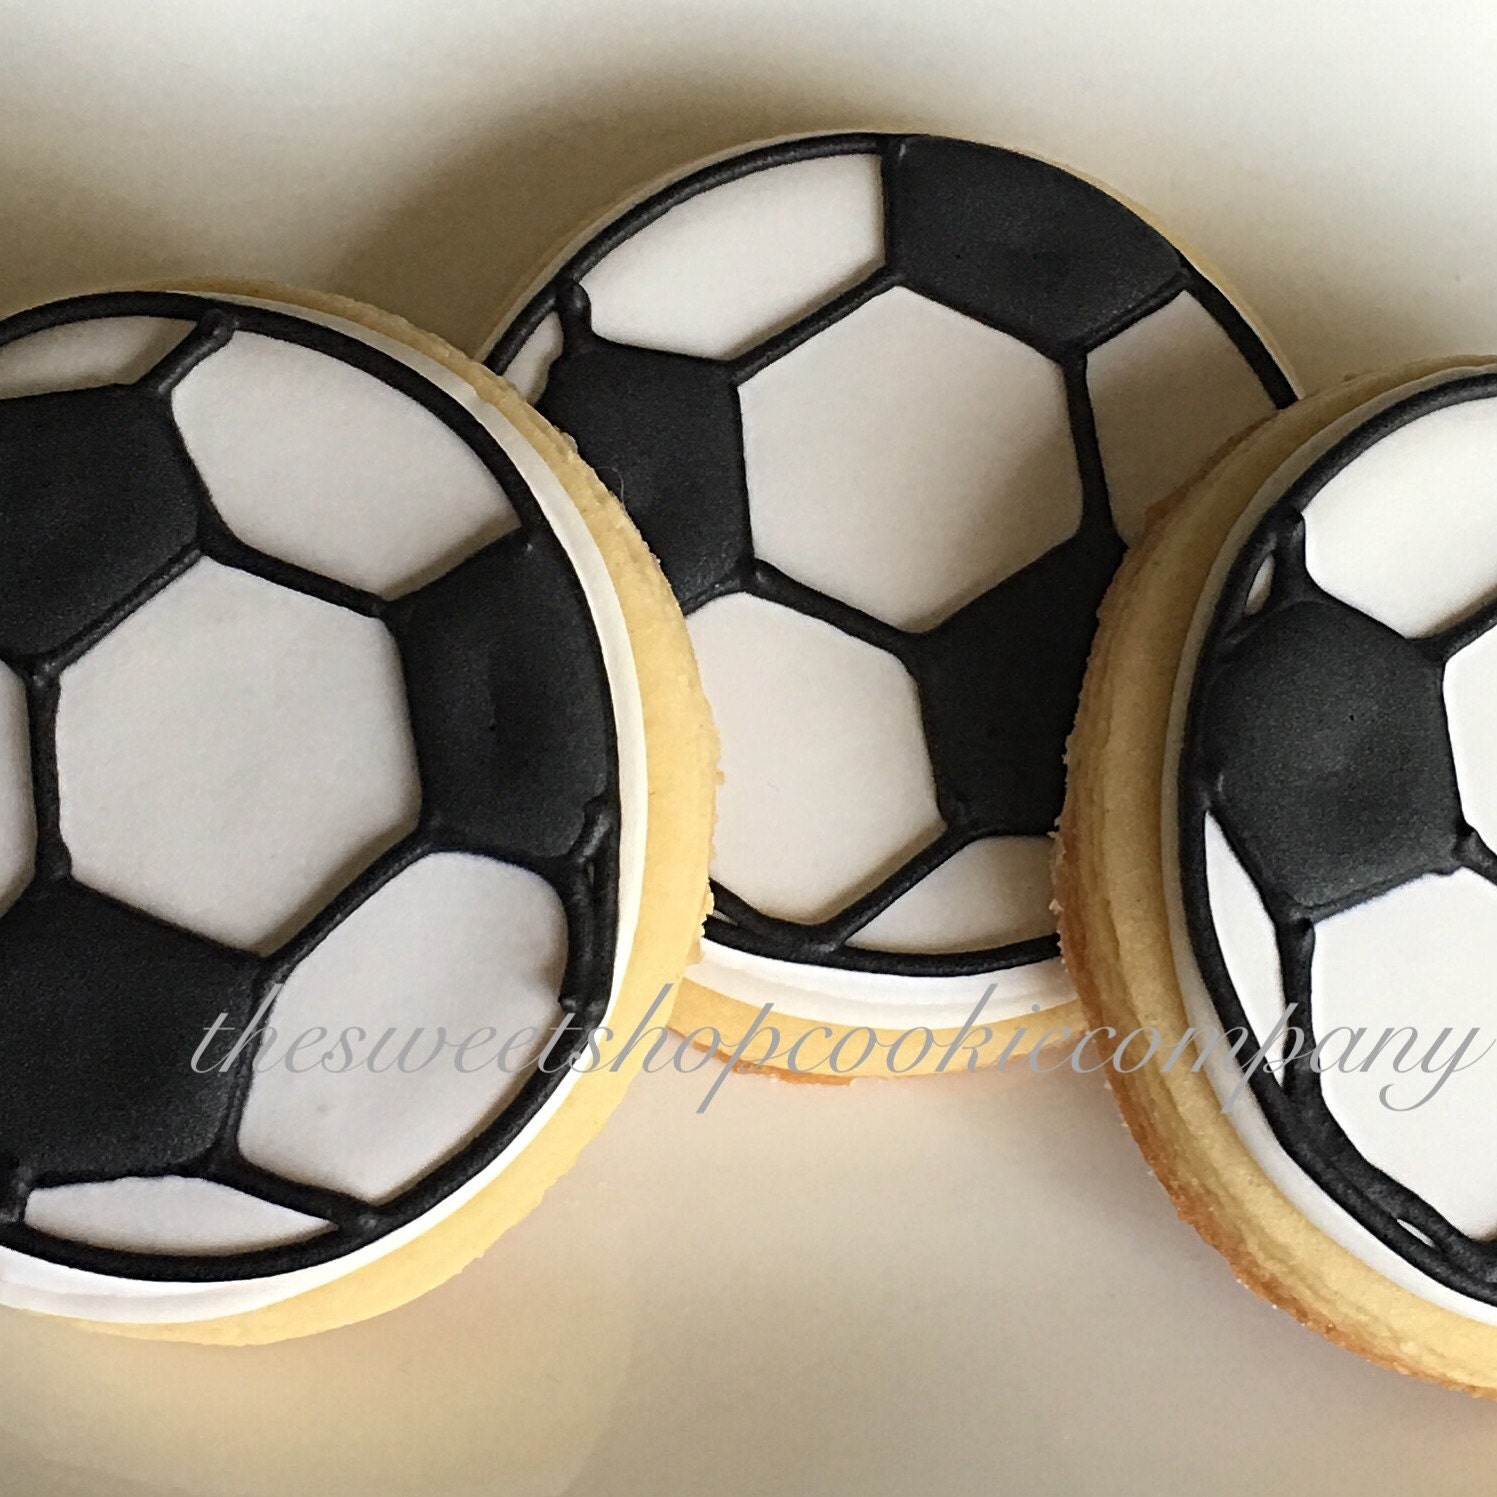 Ballons de football Biscuits 1 douzaine - Etsy France